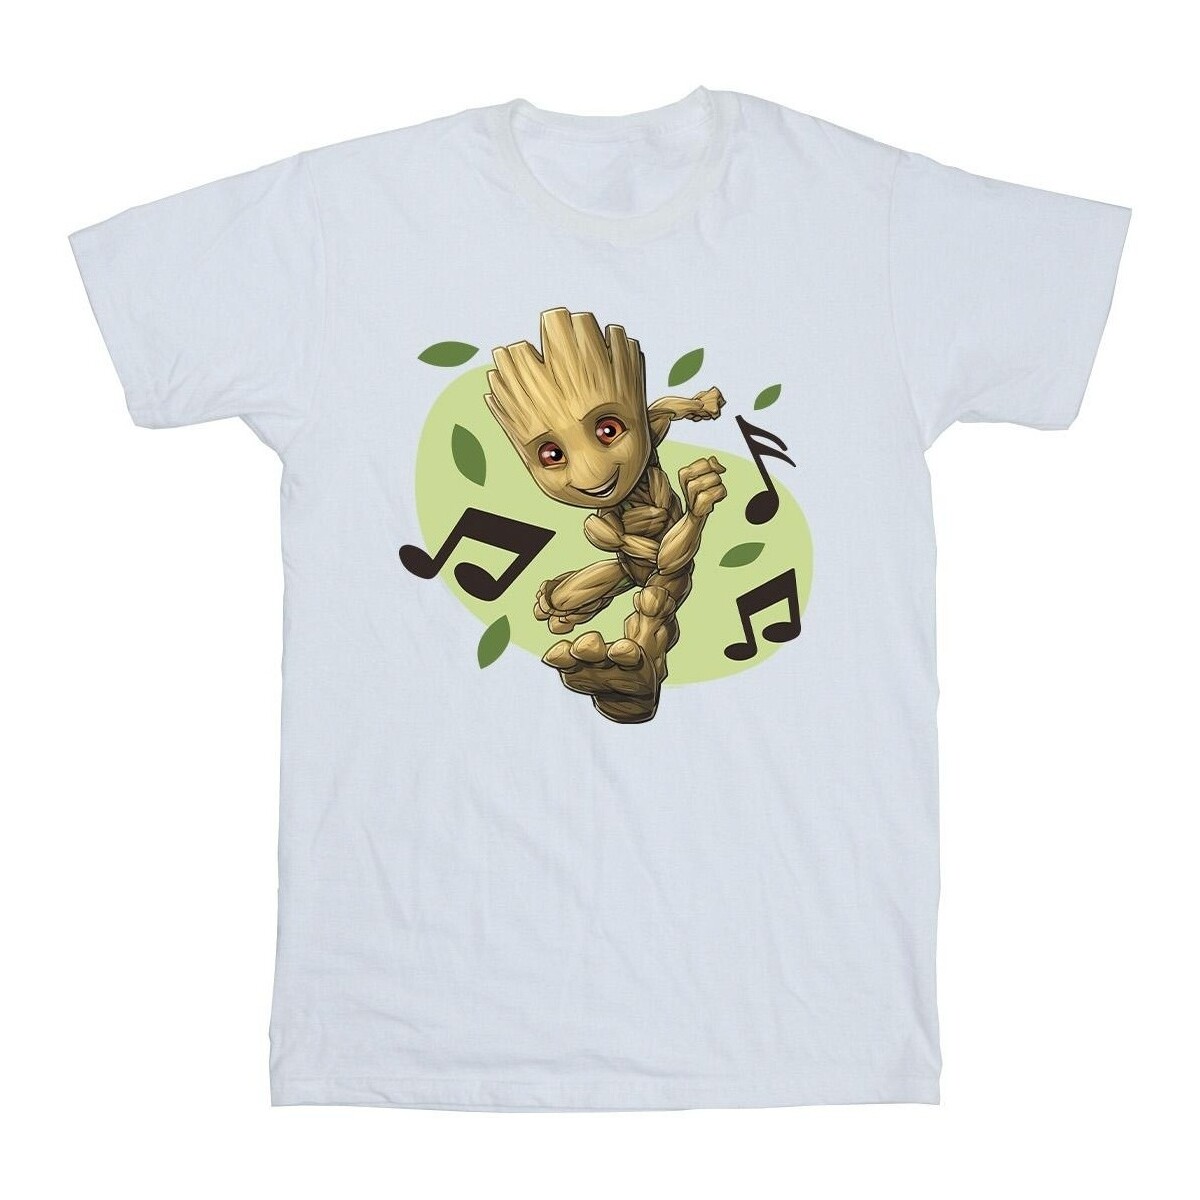 Vêtements Garçon T-shirts manches courtes Marvel Guardians Of The Galaxy Groot Musical Notes Blanc